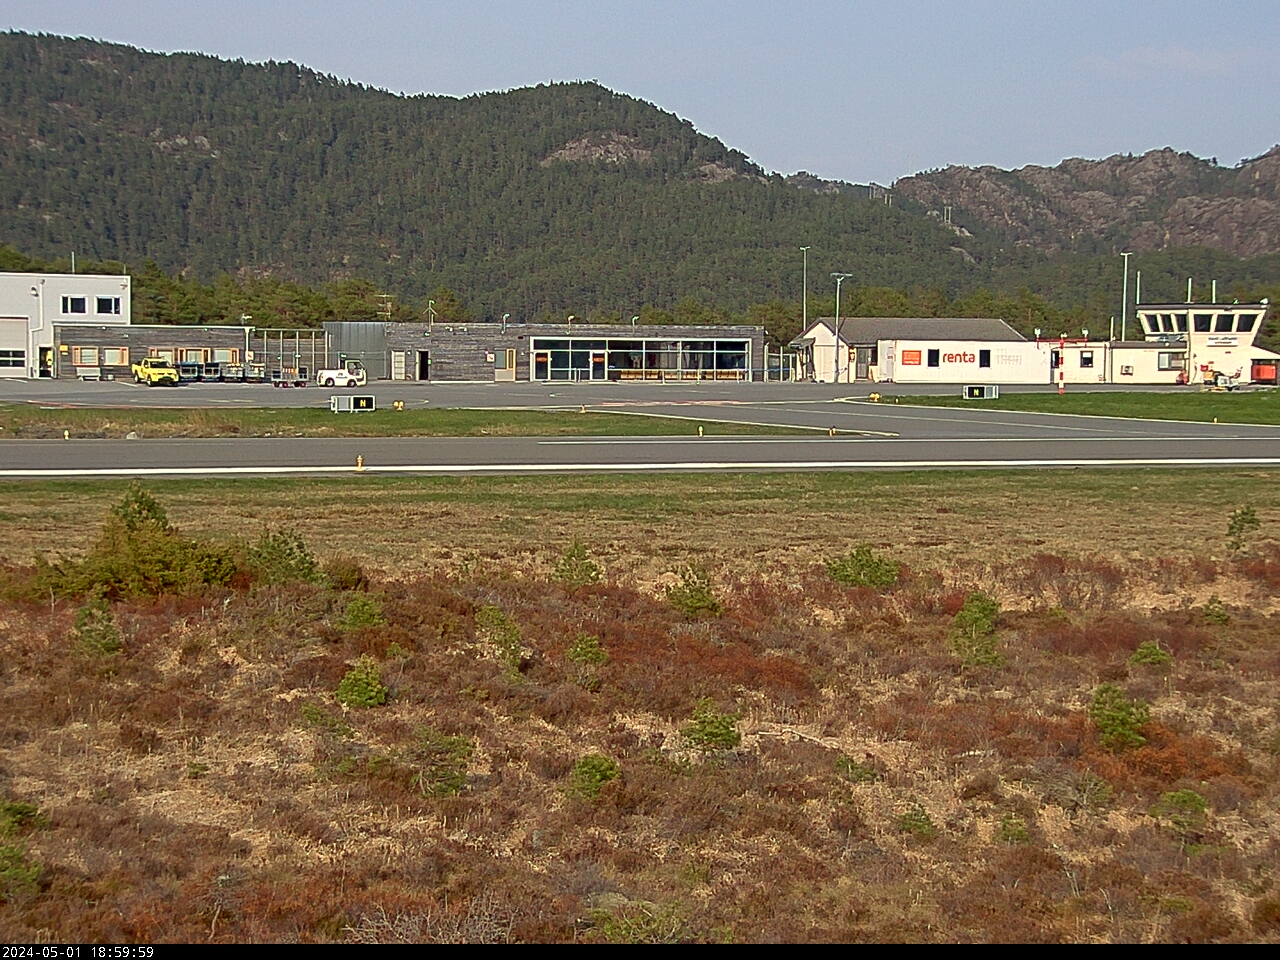 Stokksund - Stord airport